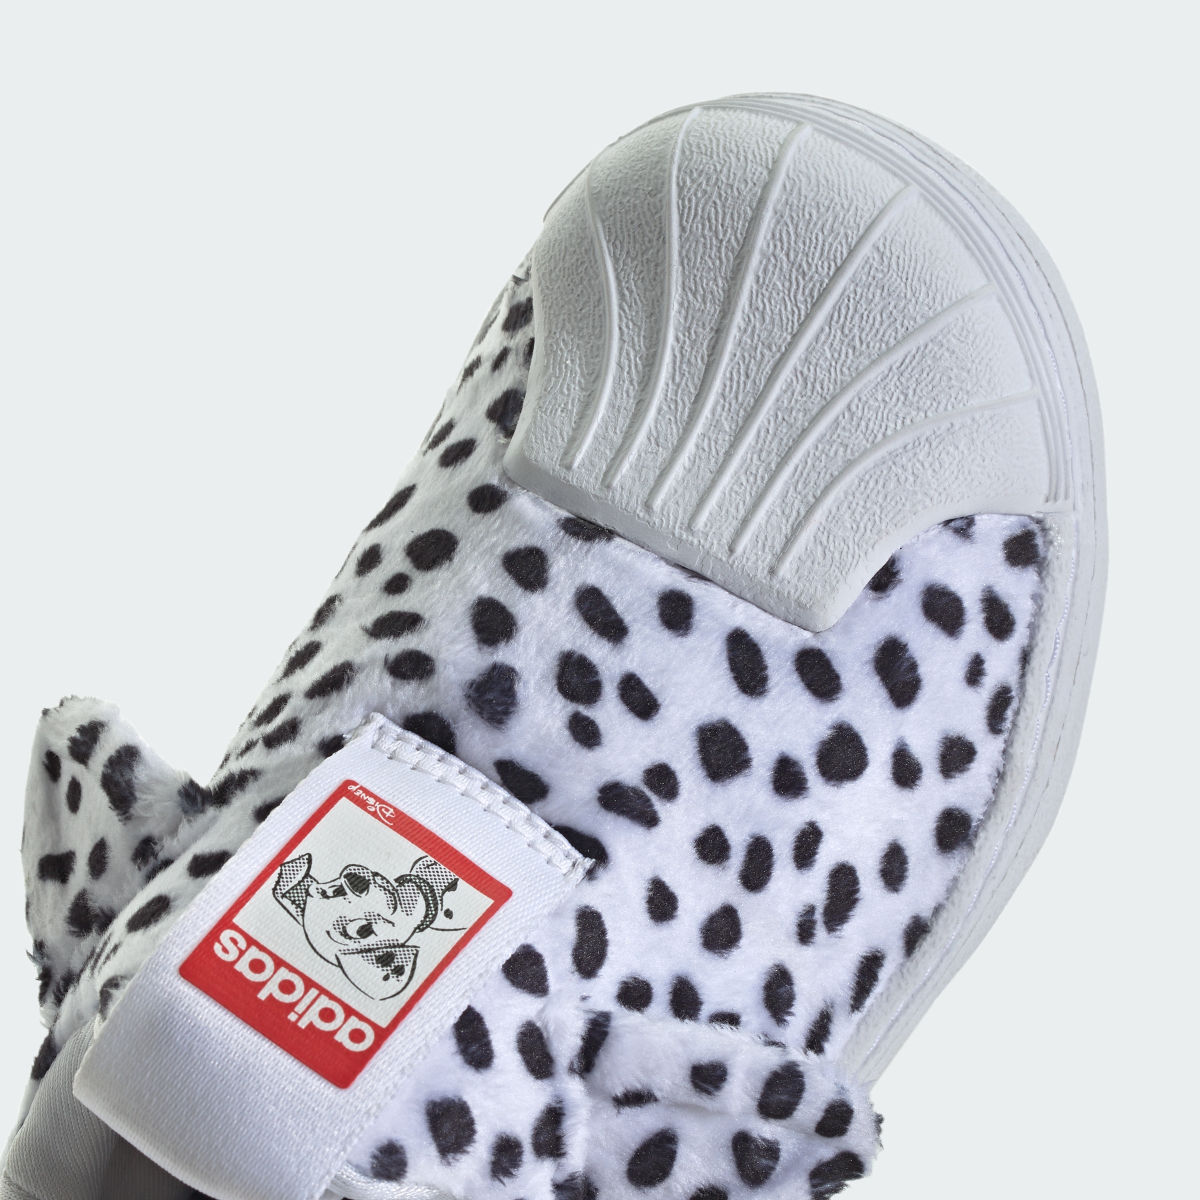 Adidas Scarpe adidas Originals x Disney 101 Dalmatians Superstar 360 Kids. 10